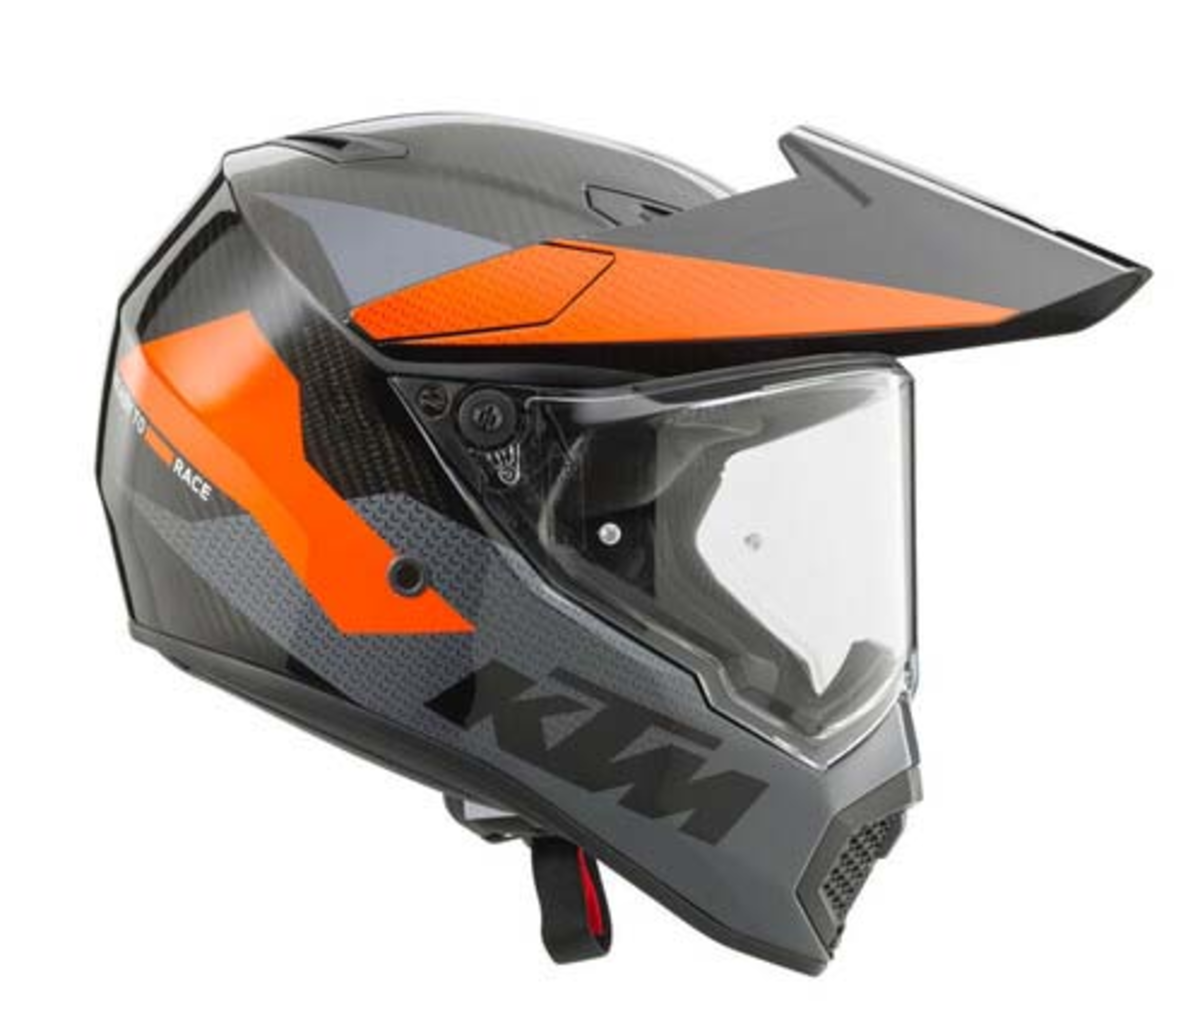 KTM AX9 Helmet